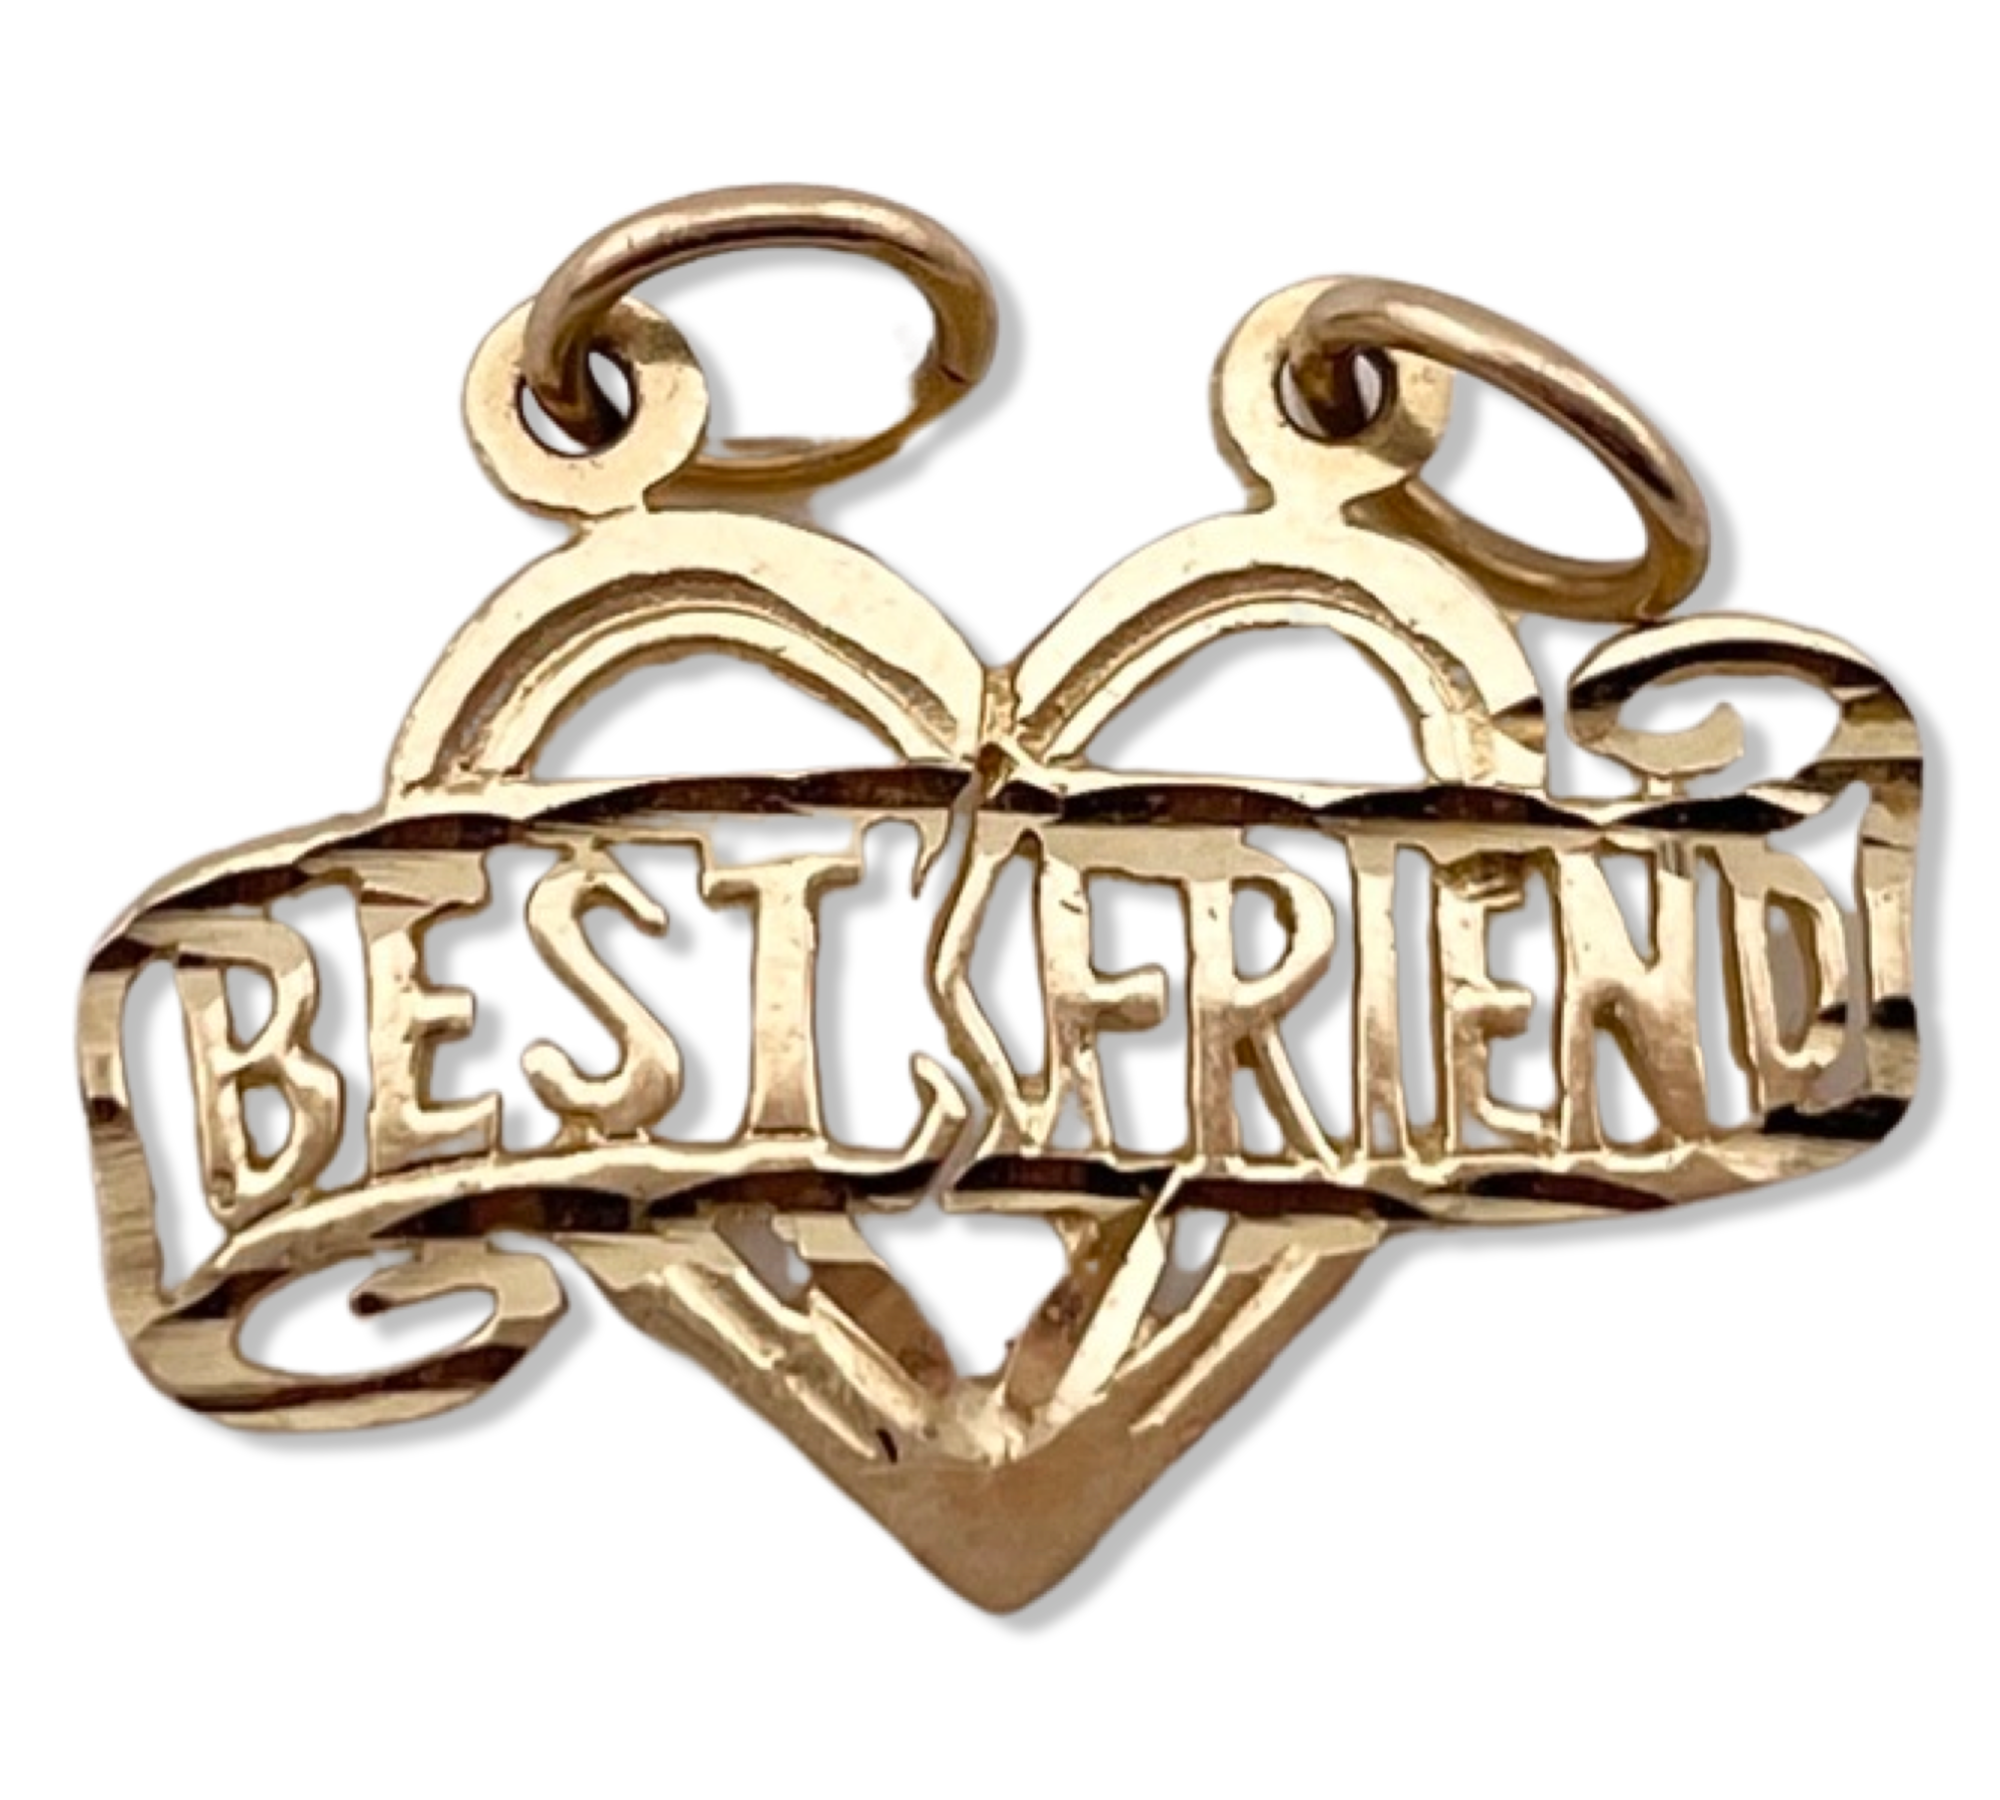 14k gold 'Best Friend' split heart charm pendant